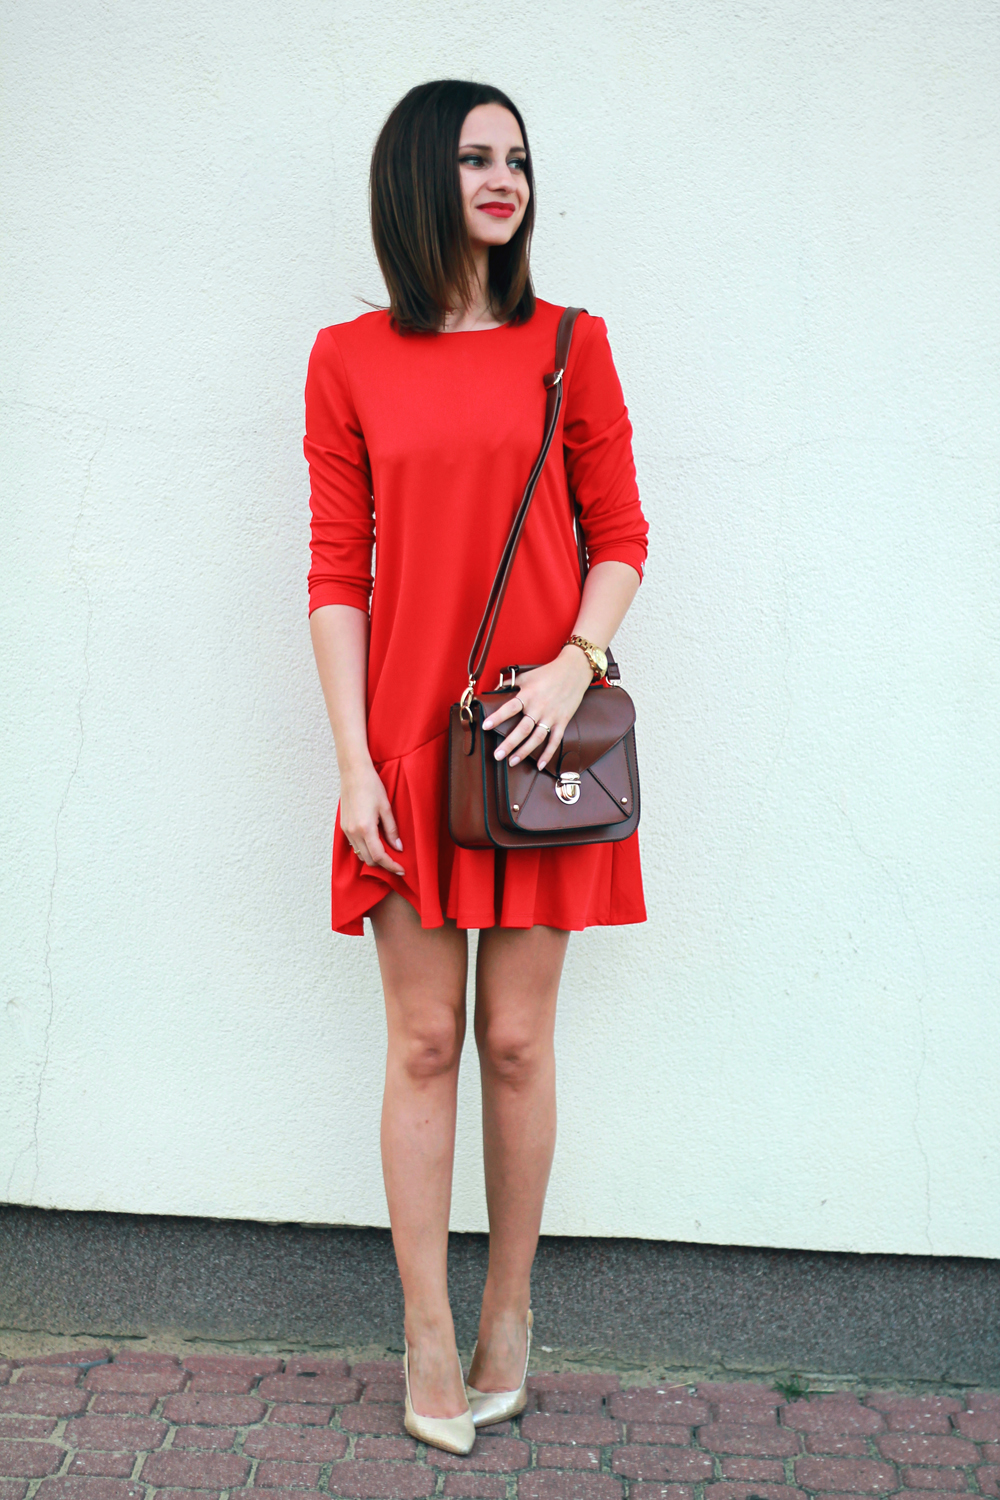 mohito-red-dress-new-yorker-bag-brunette-tumblr-girl-chic-fashion-street-style-2